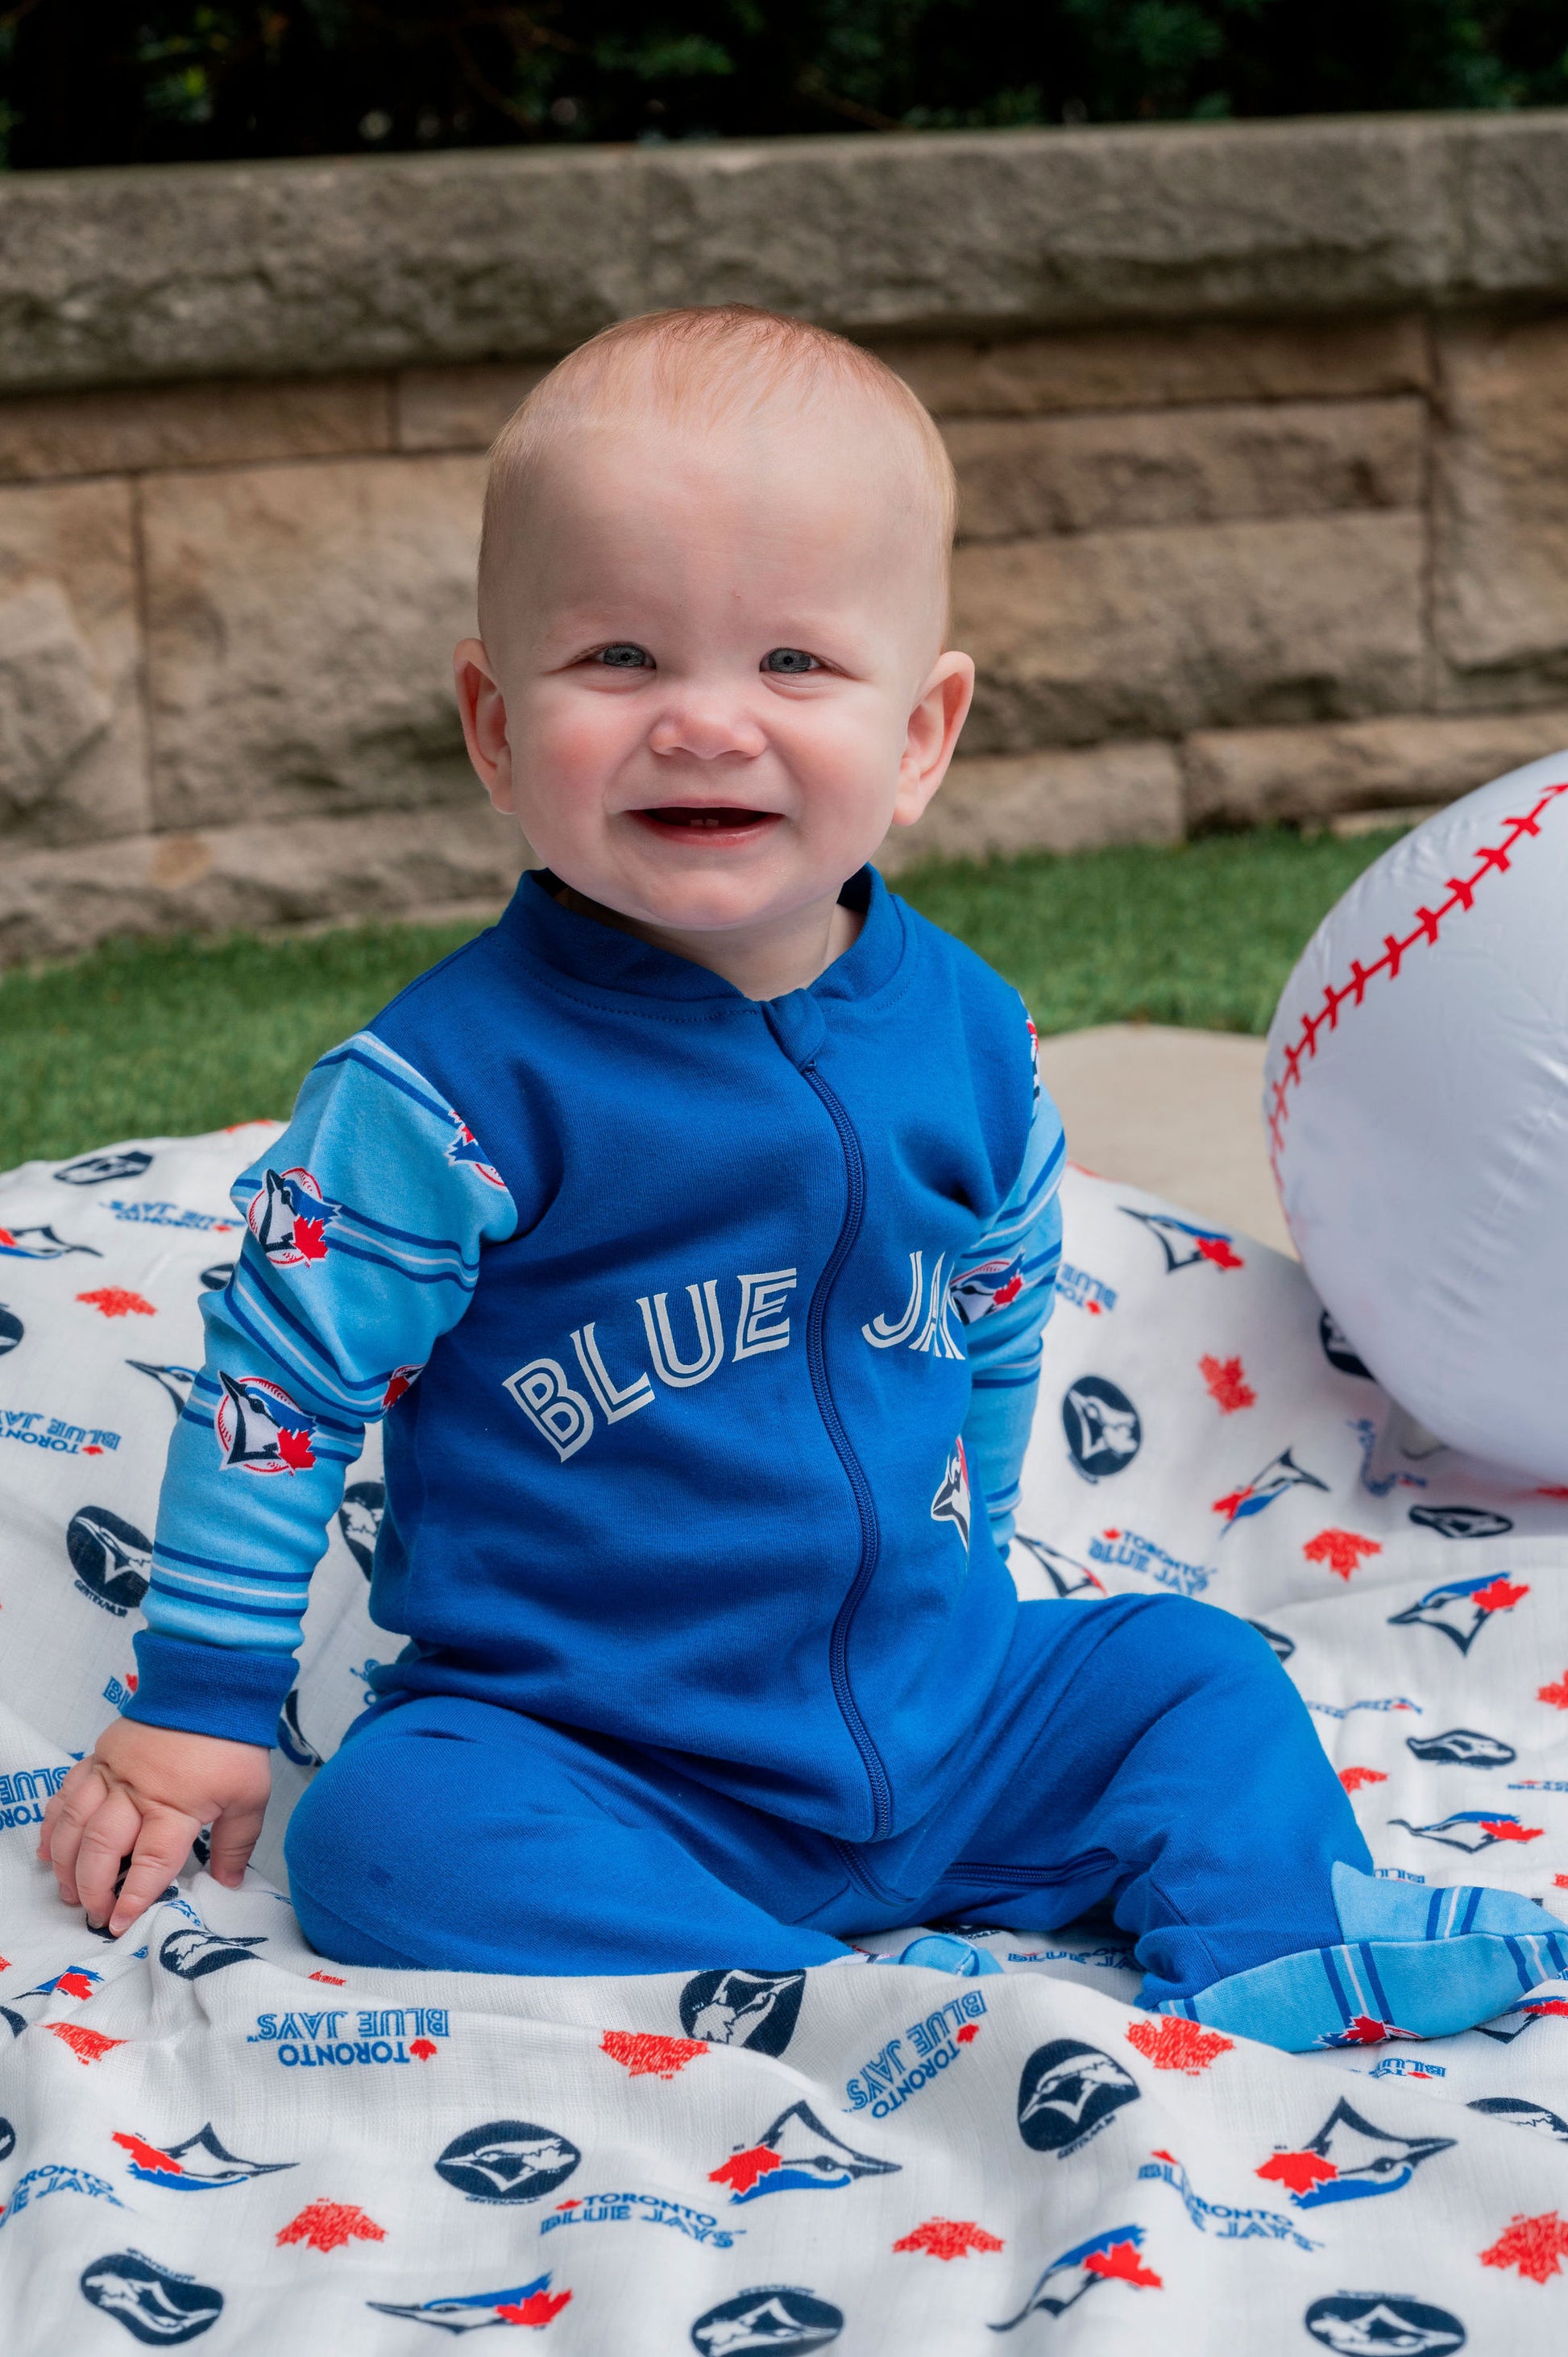 Gertex MLB Toronto Blue Jays Baby 5-Piece Layette Set